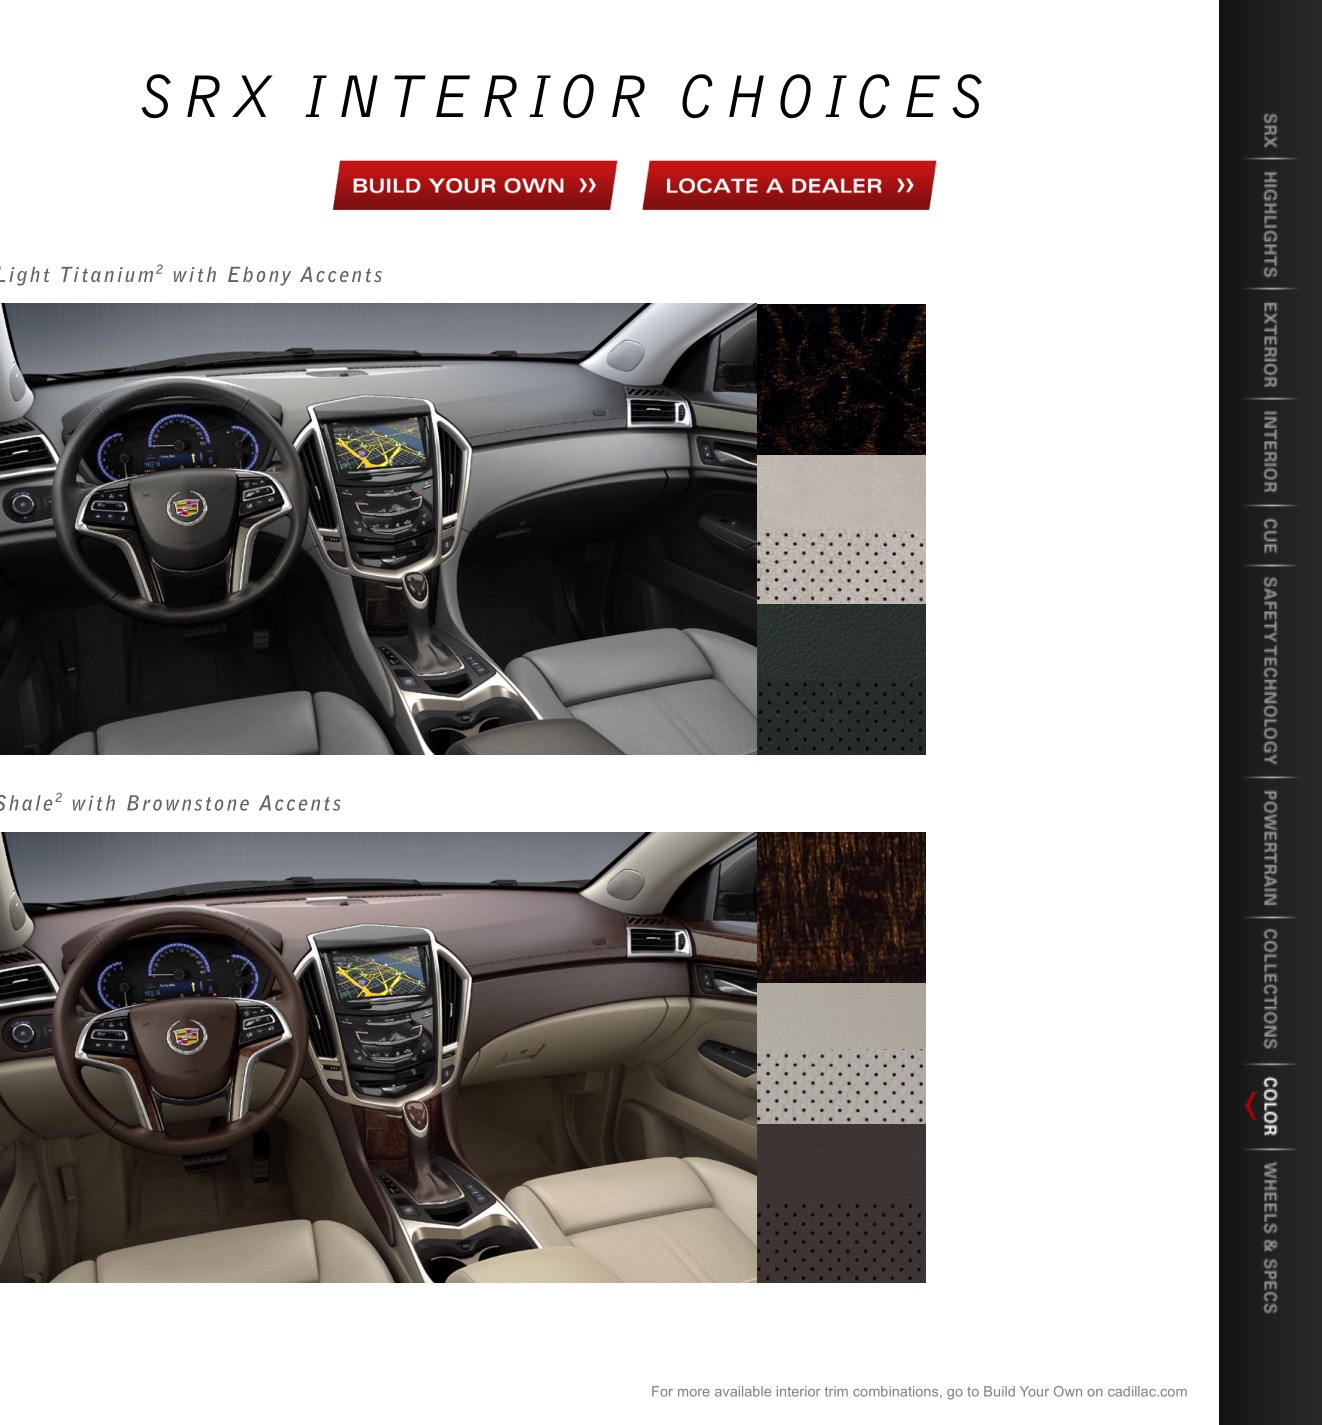 2013 Cadillac SRX Brochure Page 33